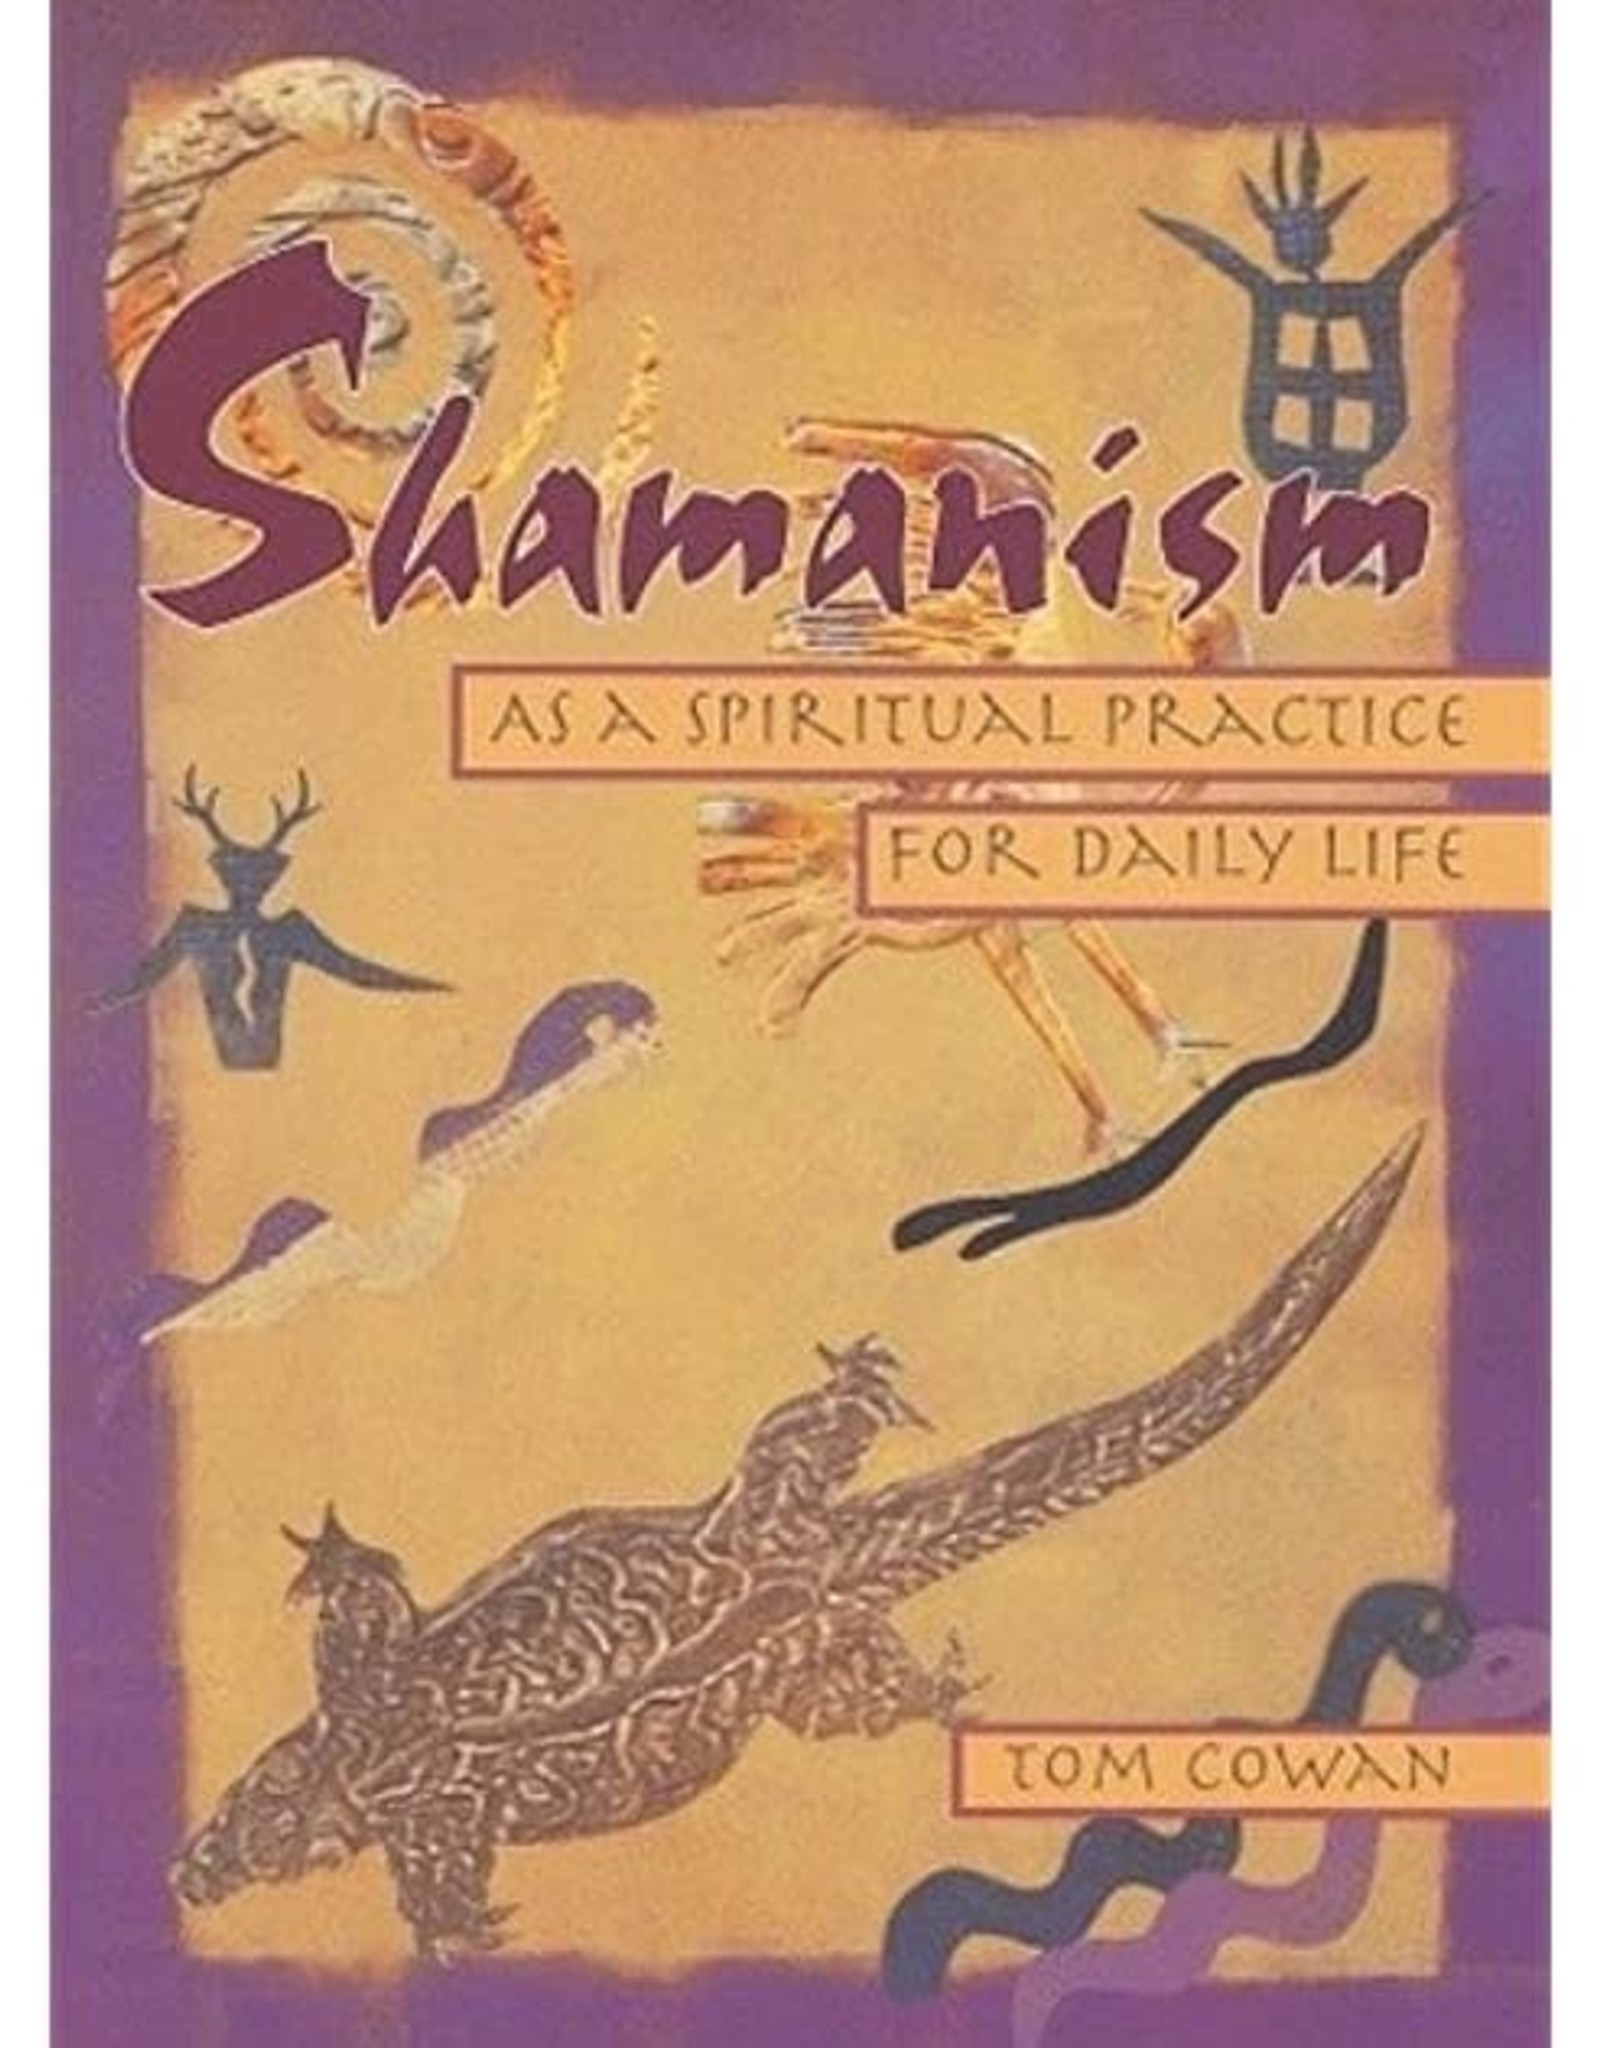 Tom Cowan Shamanism by Tom Cowan